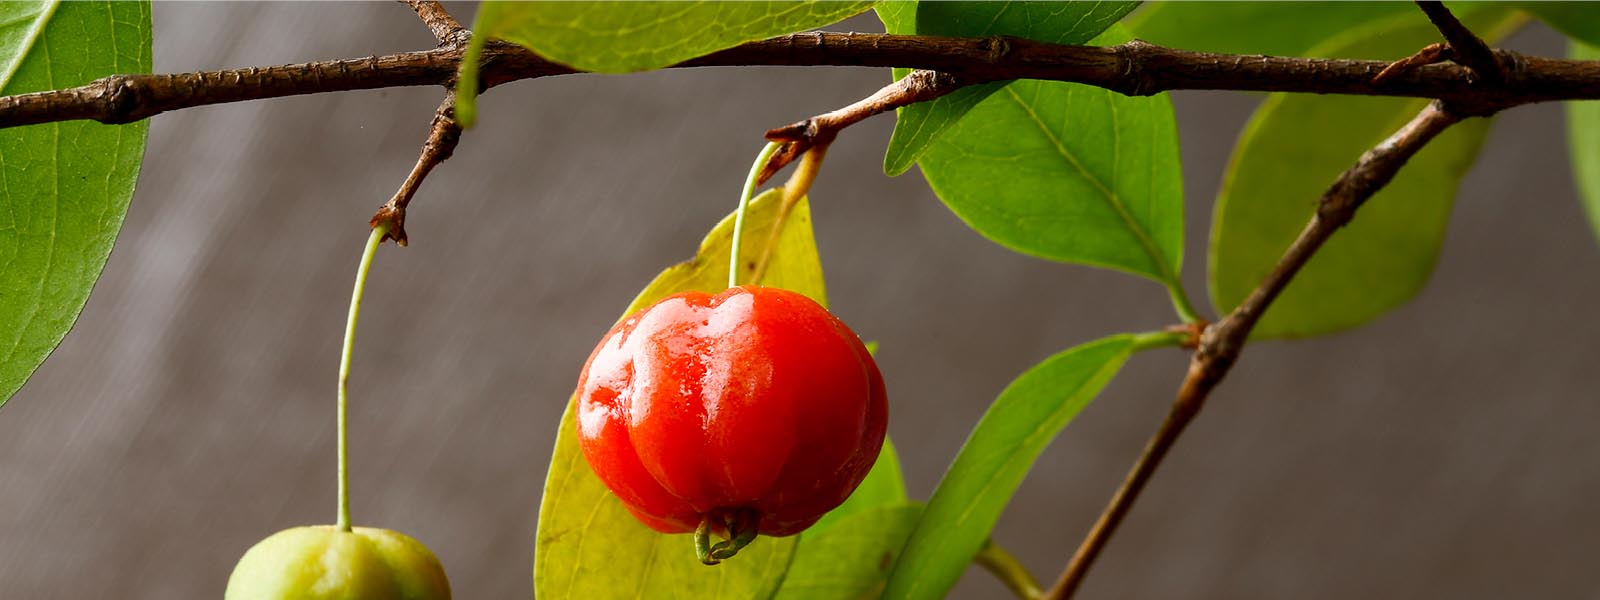 Brazillian cherry pest plant web